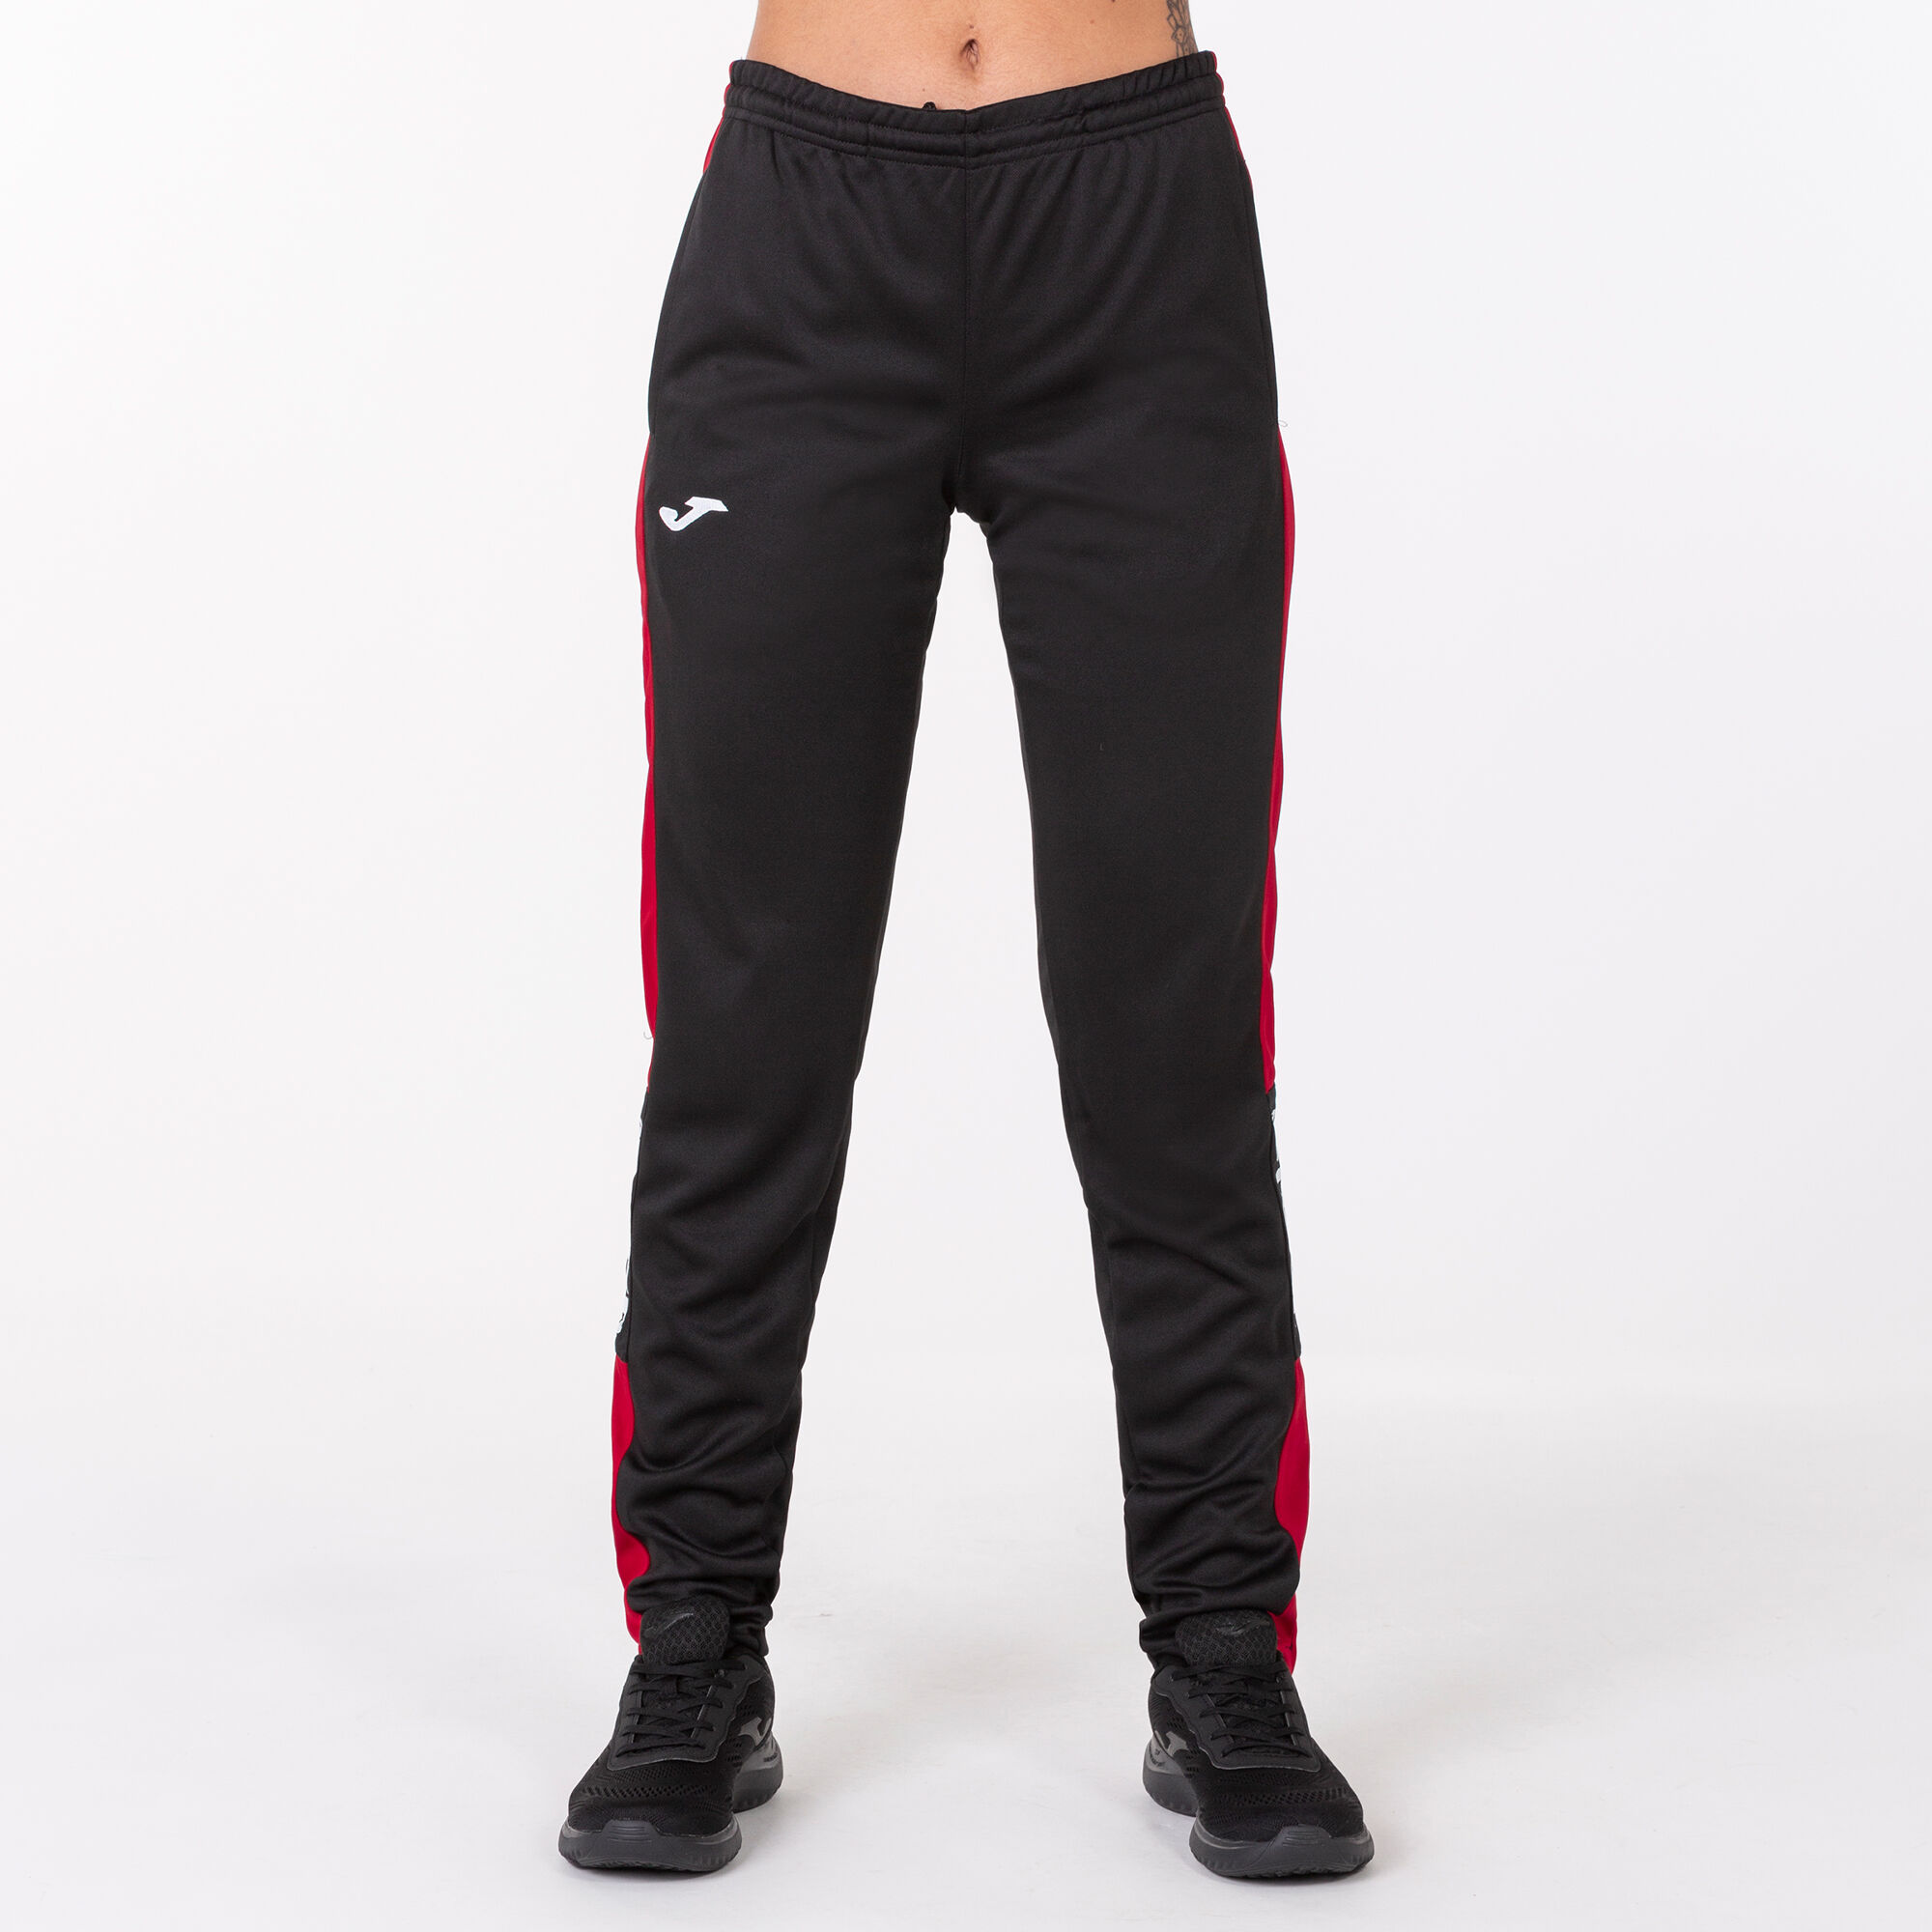 Longs pants woman Championship IV black red